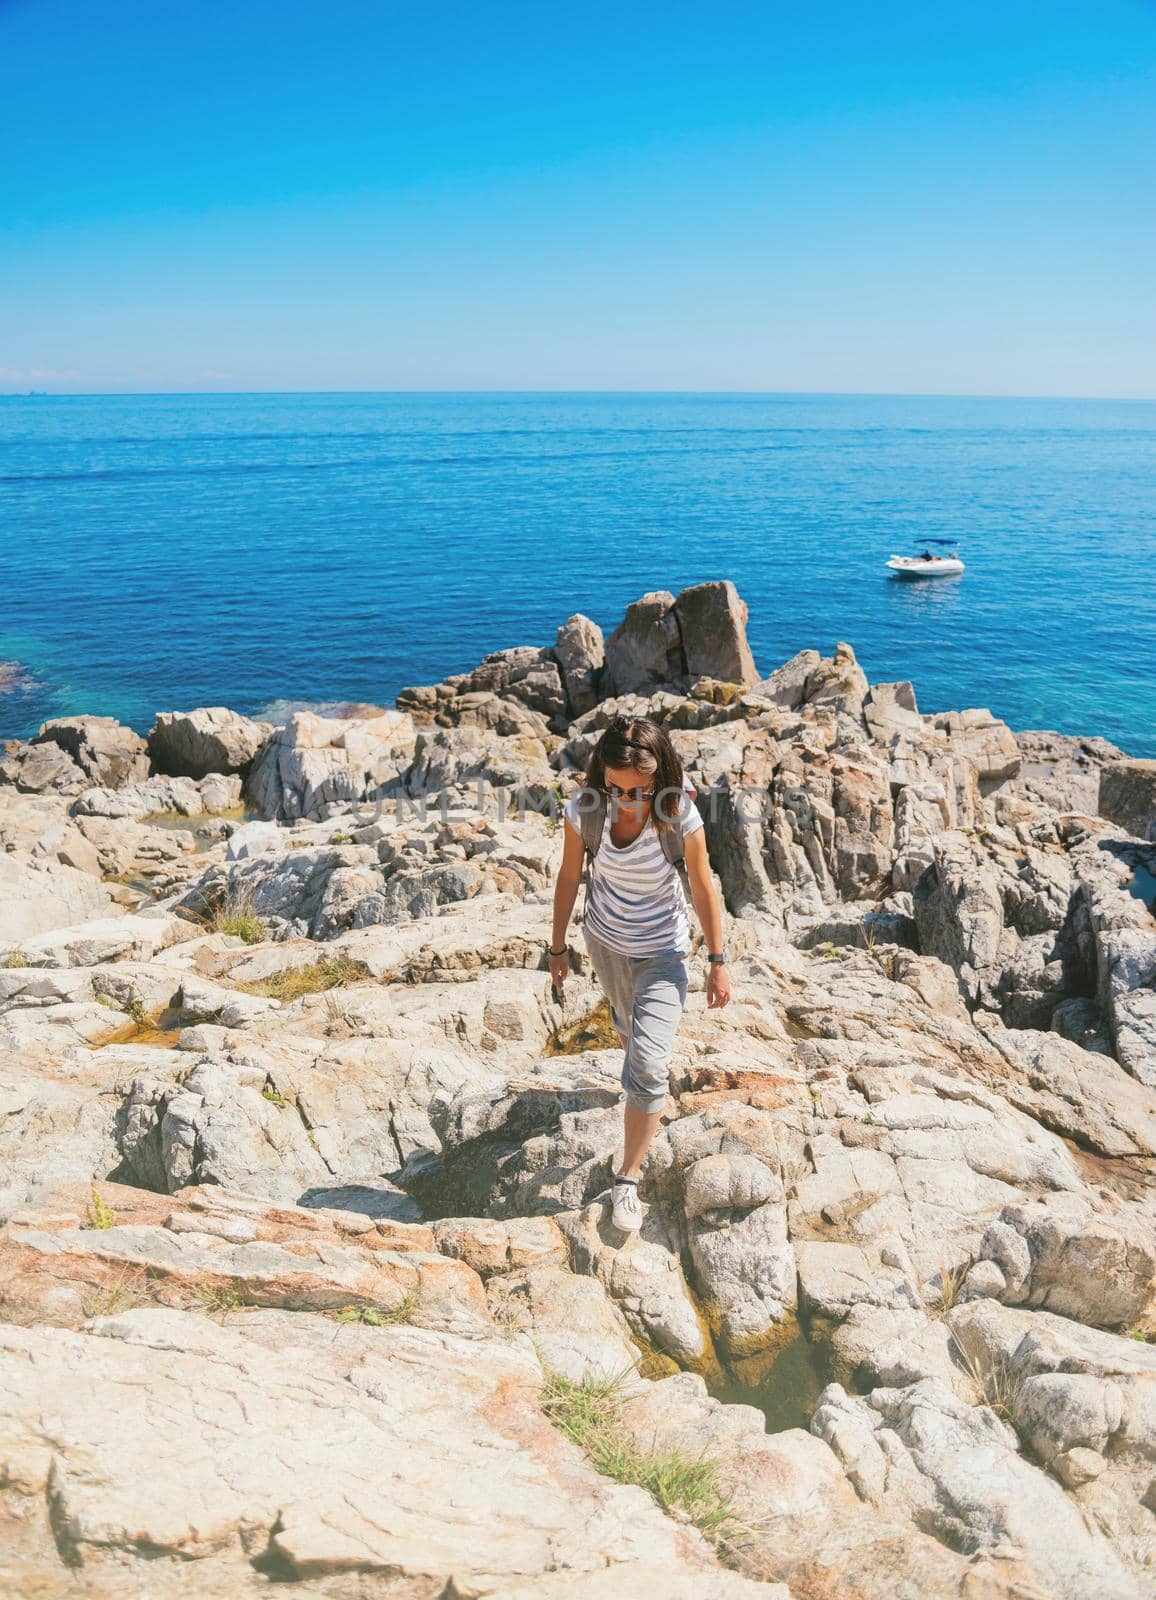 Young traveler woman walking on stone island in the sea